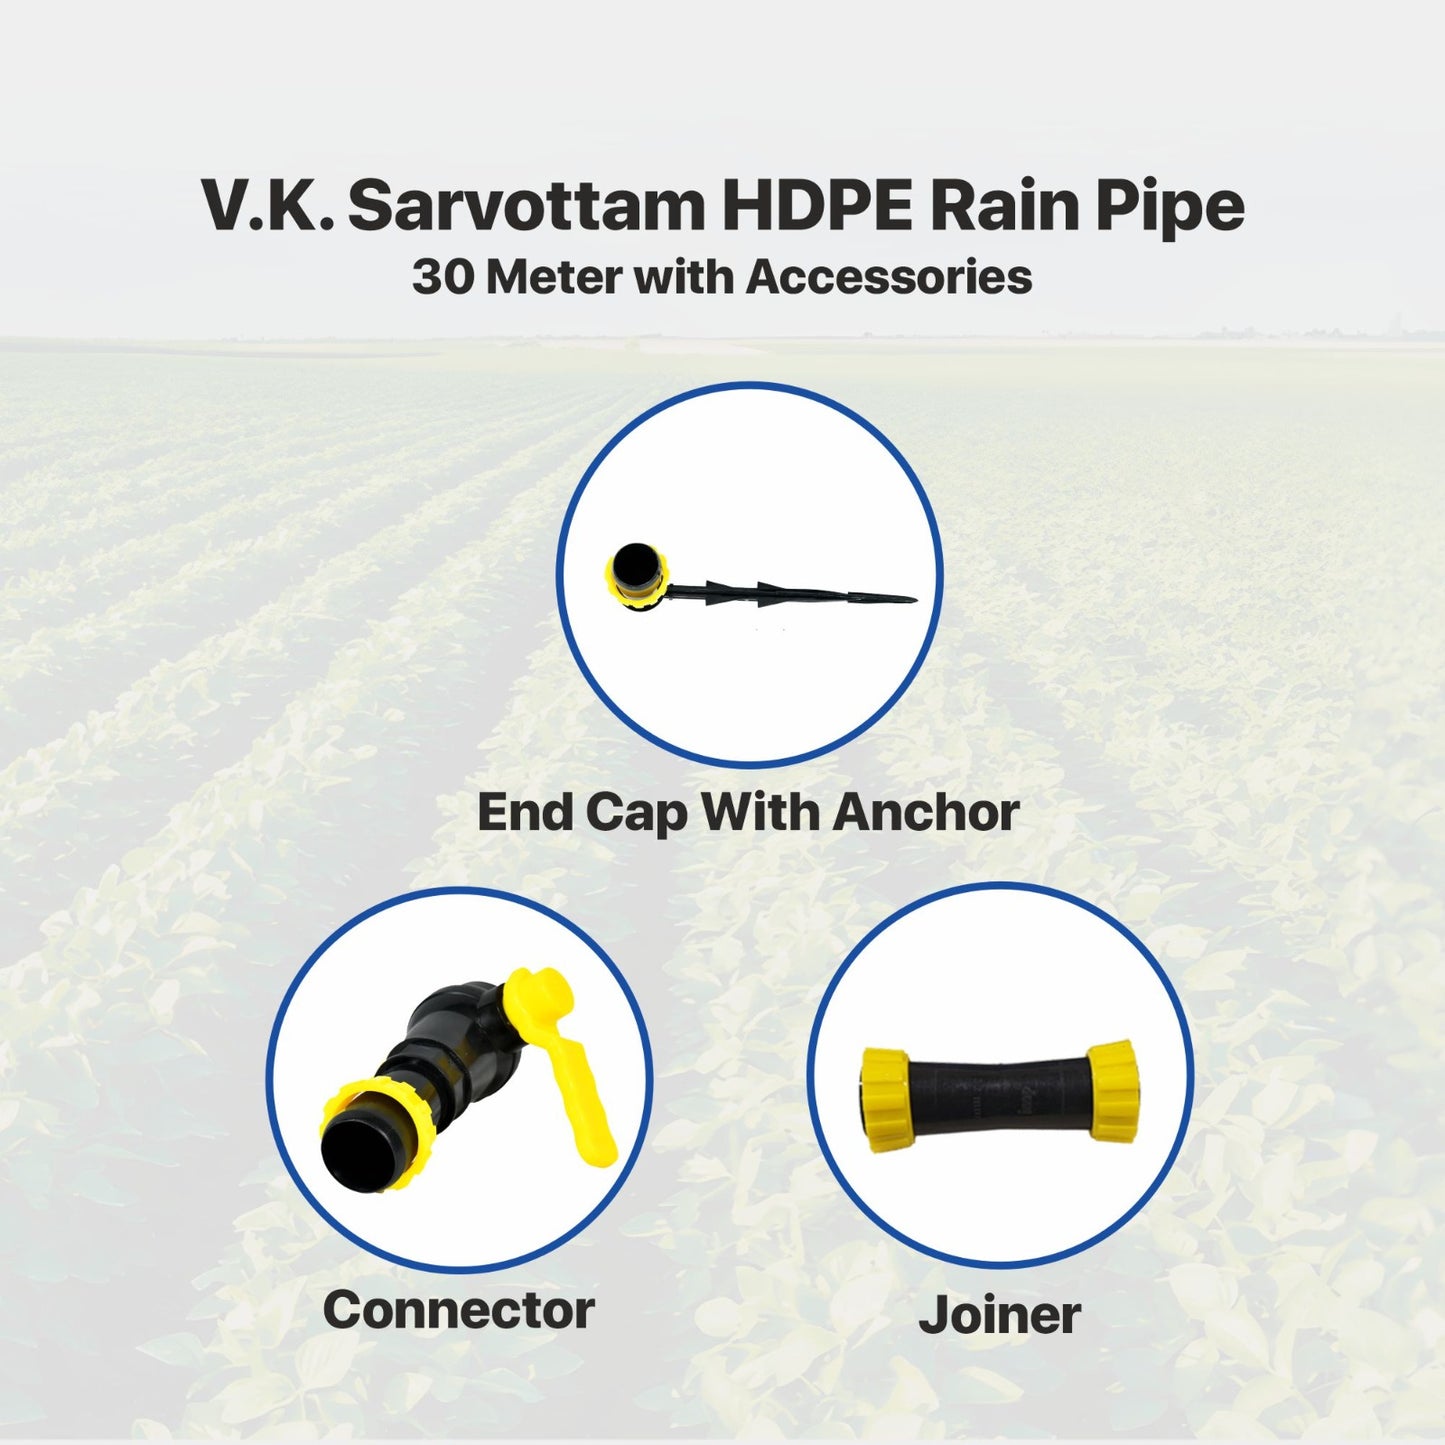 V.K. Sarvottam HDPE Rain Pipe - 30 Meter with Accessories